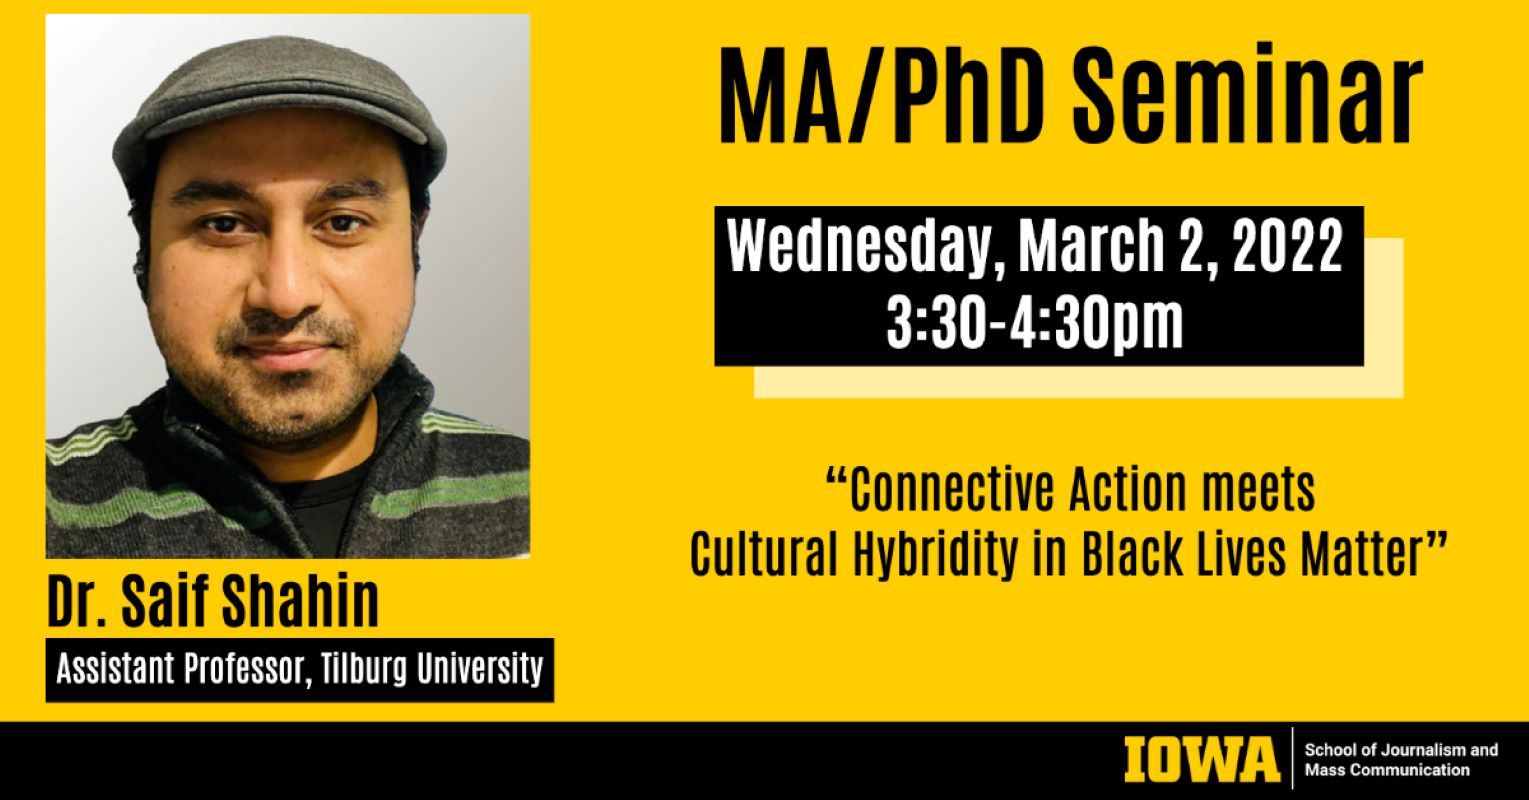 Dr. Saif Shahin at MA/PhD Seminar, Wednesday, March 2, 3:30-4:30